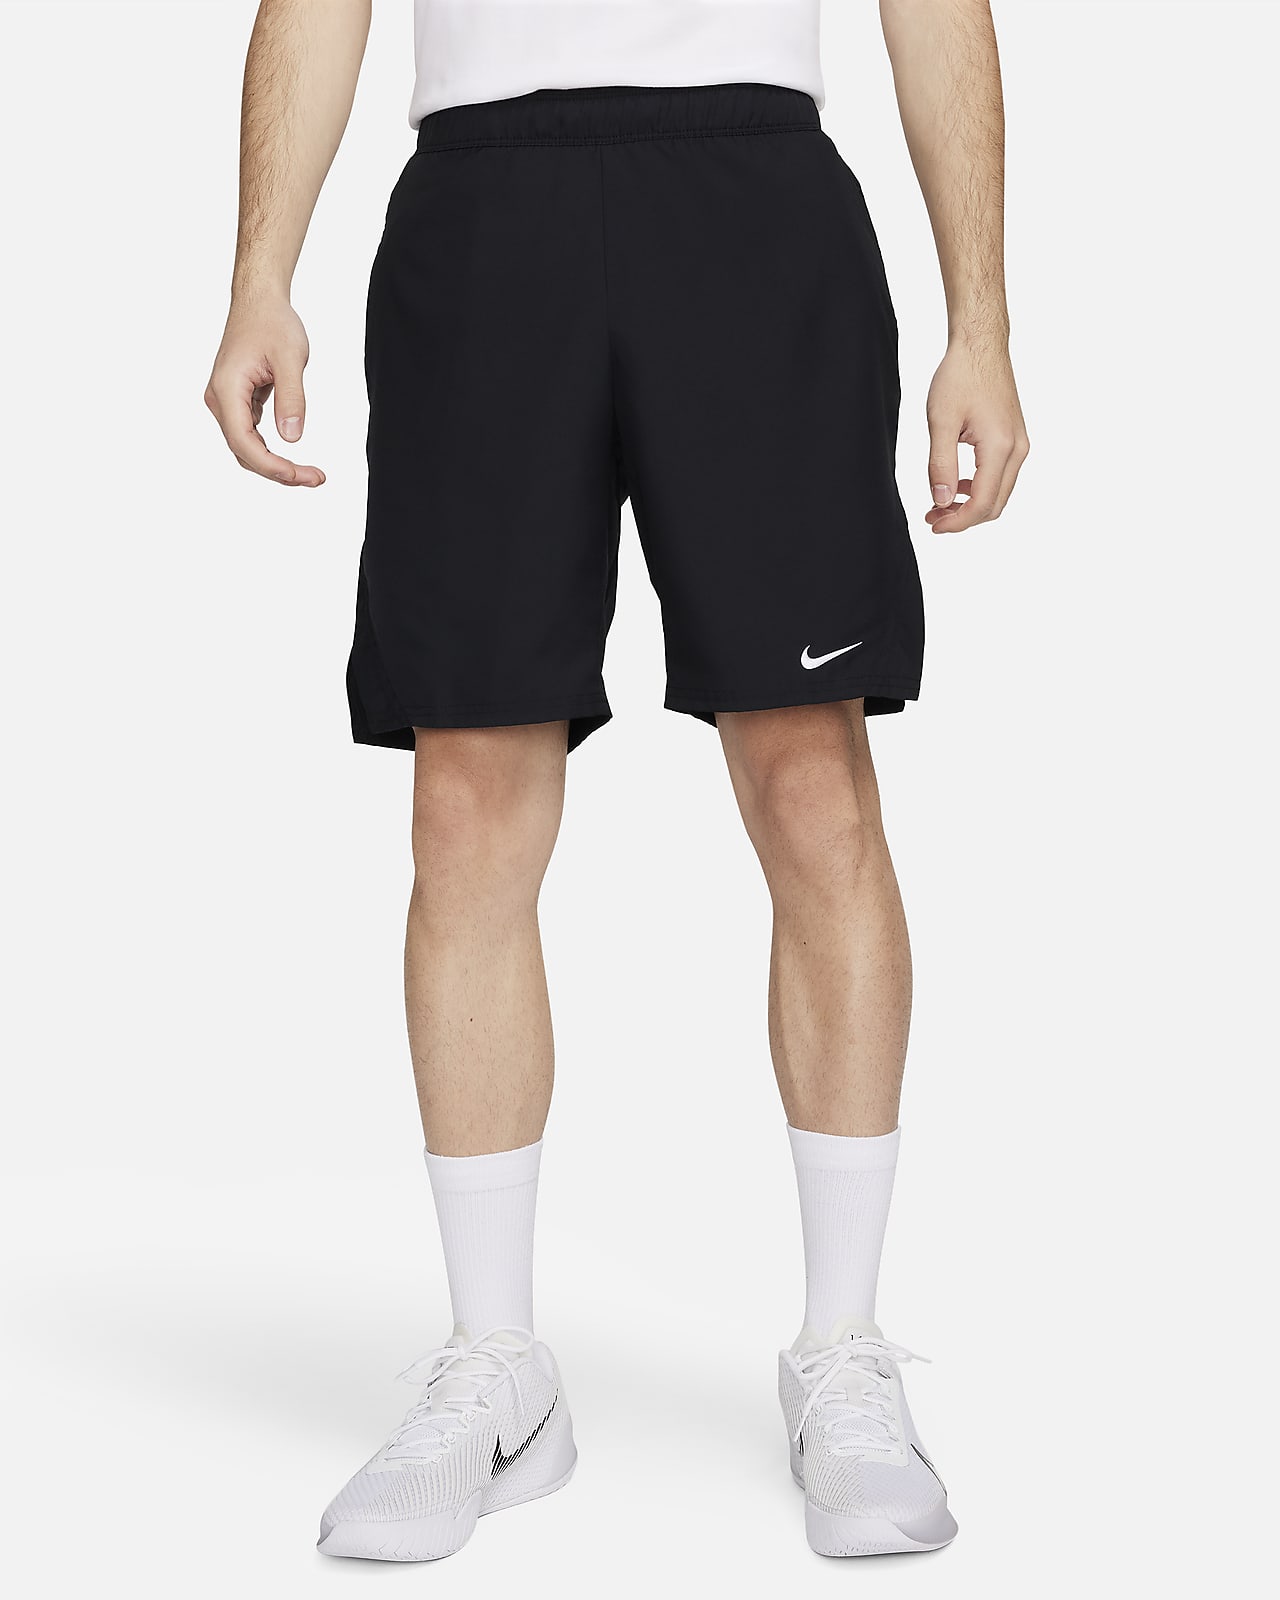 NikeCourt Victory 男款 Dri-FIT 9" 網球短褲